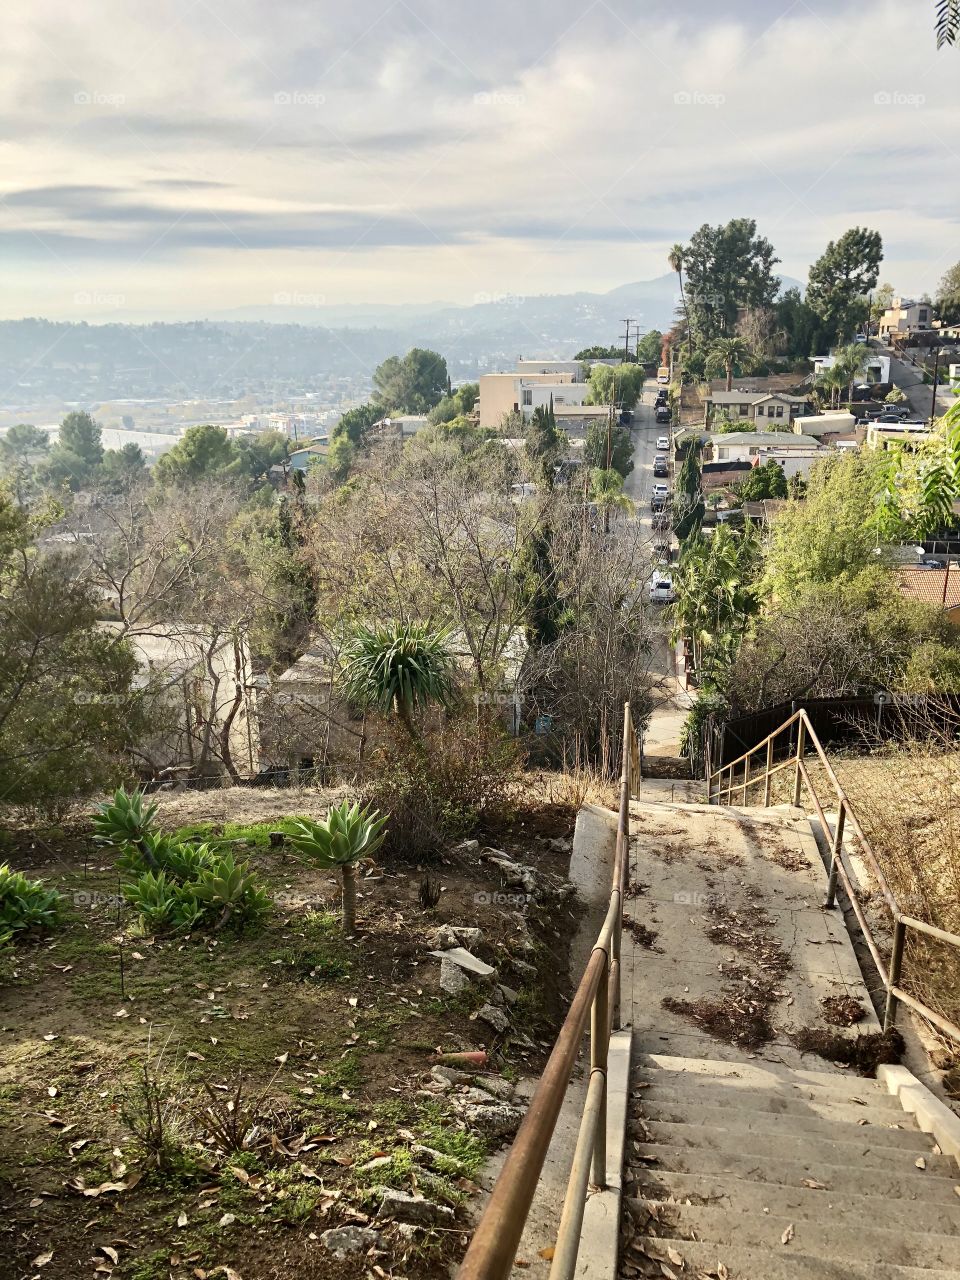 Los Angeles hillside neighborhood stairs